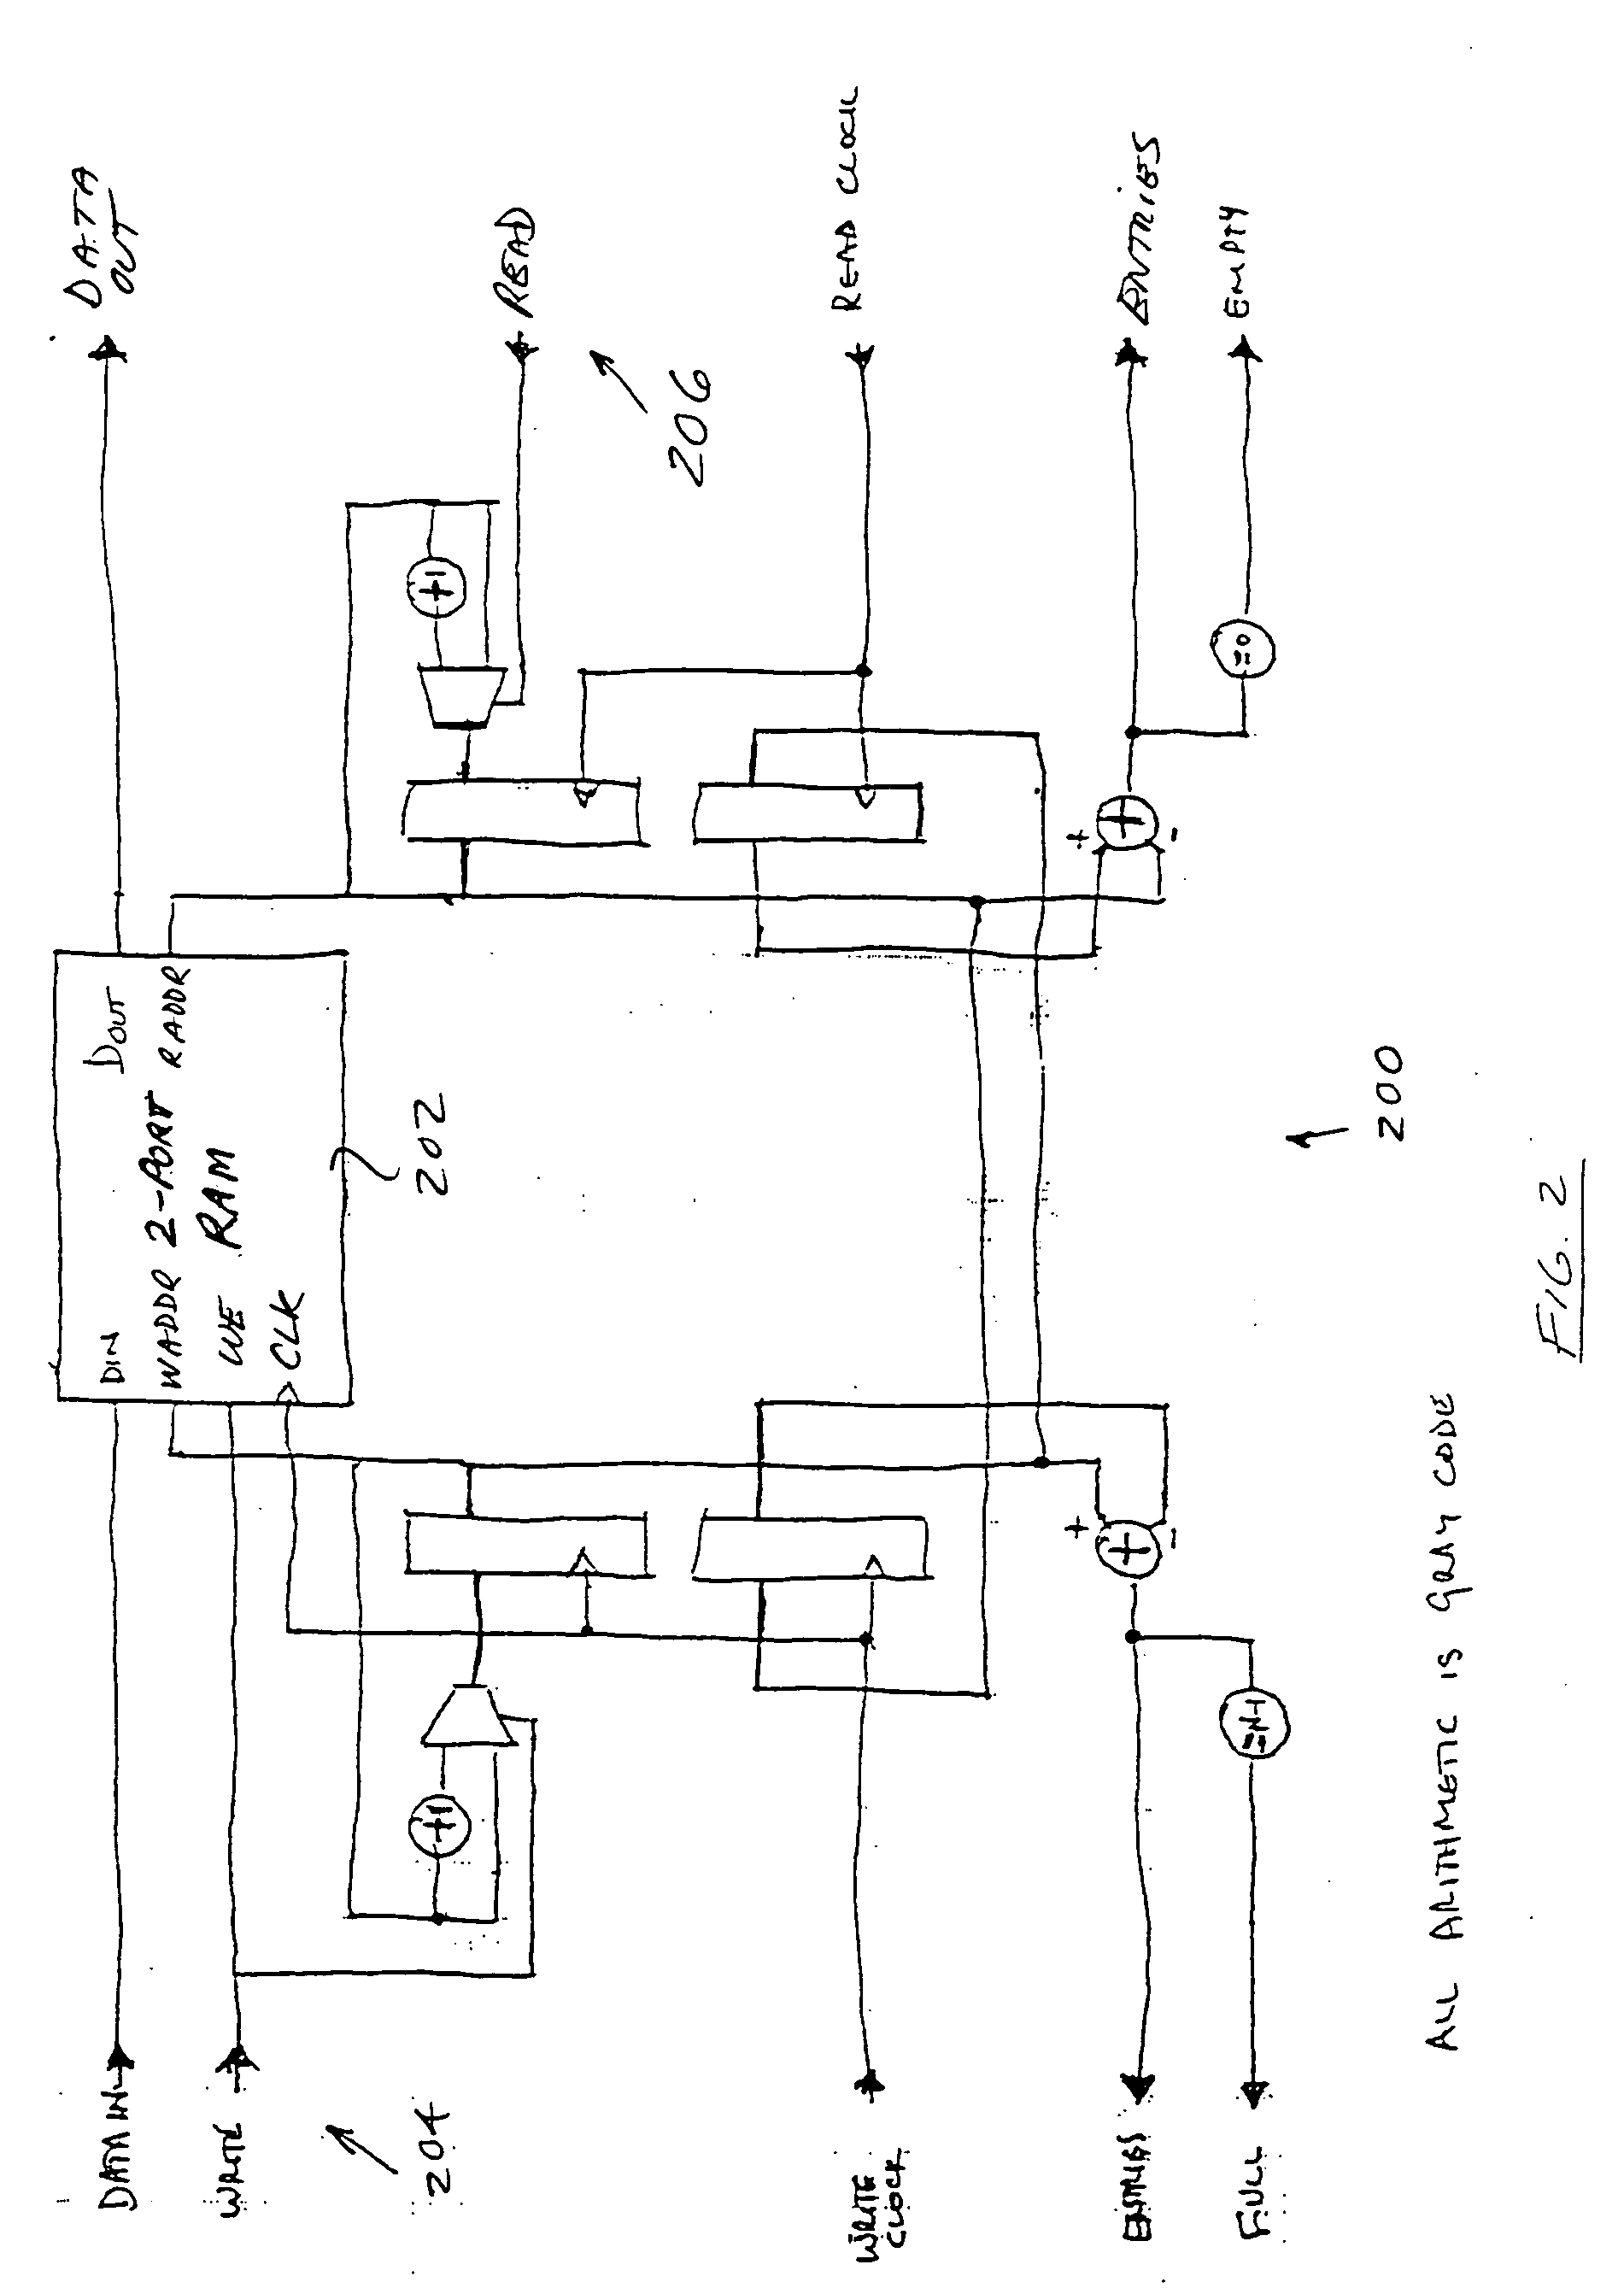 Noise shaped interpolator and decimator apparatus and method